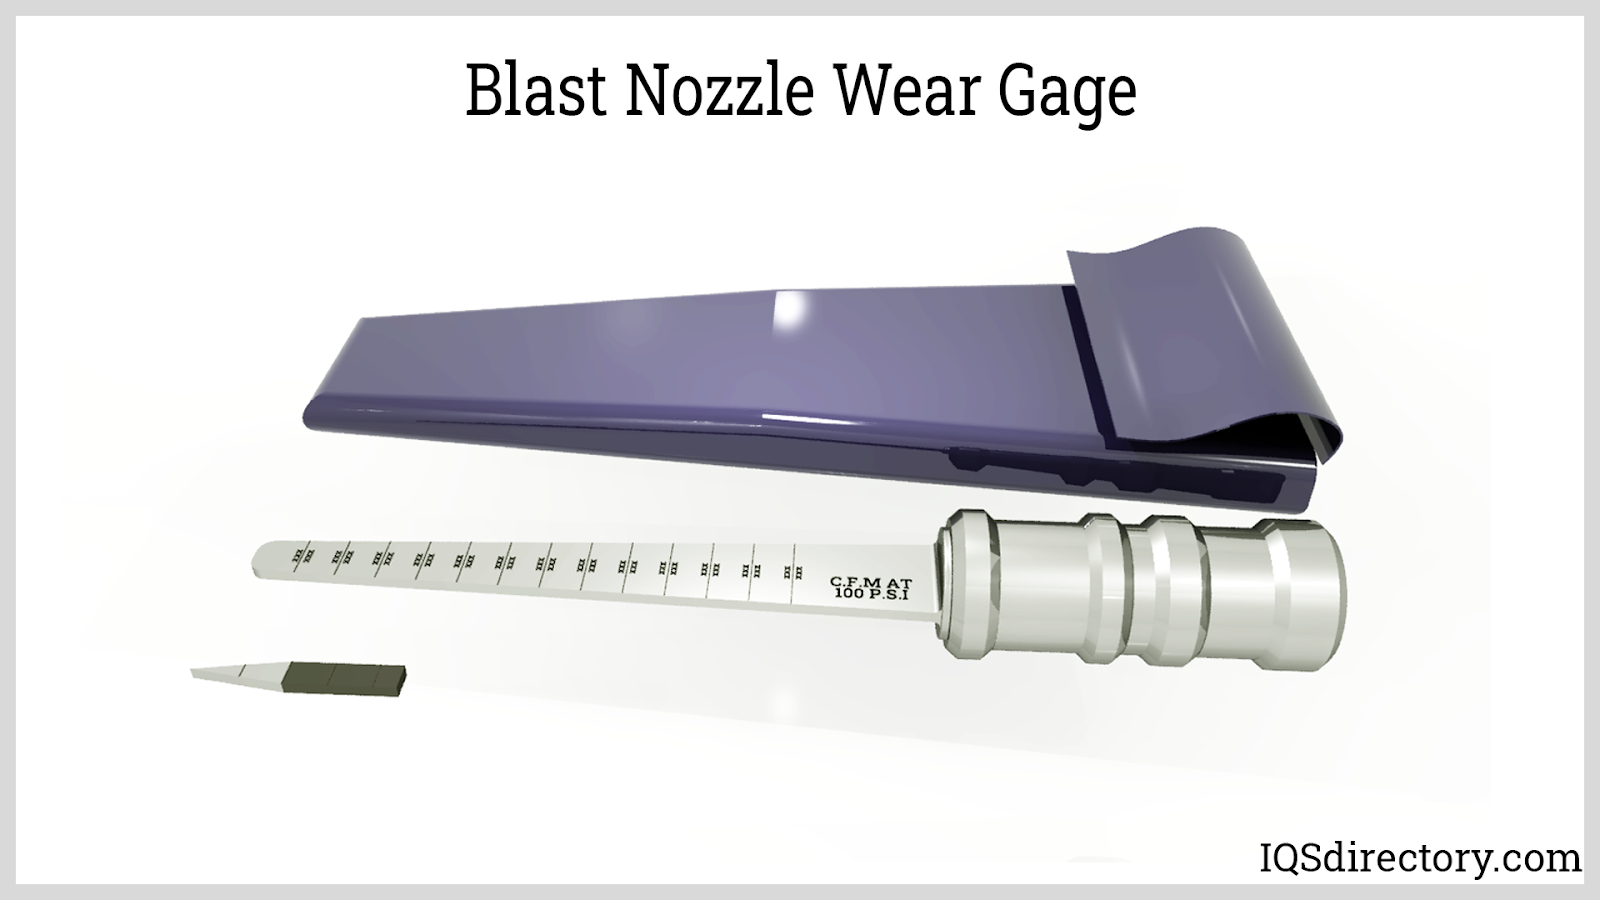 Blast nozzle wear gage